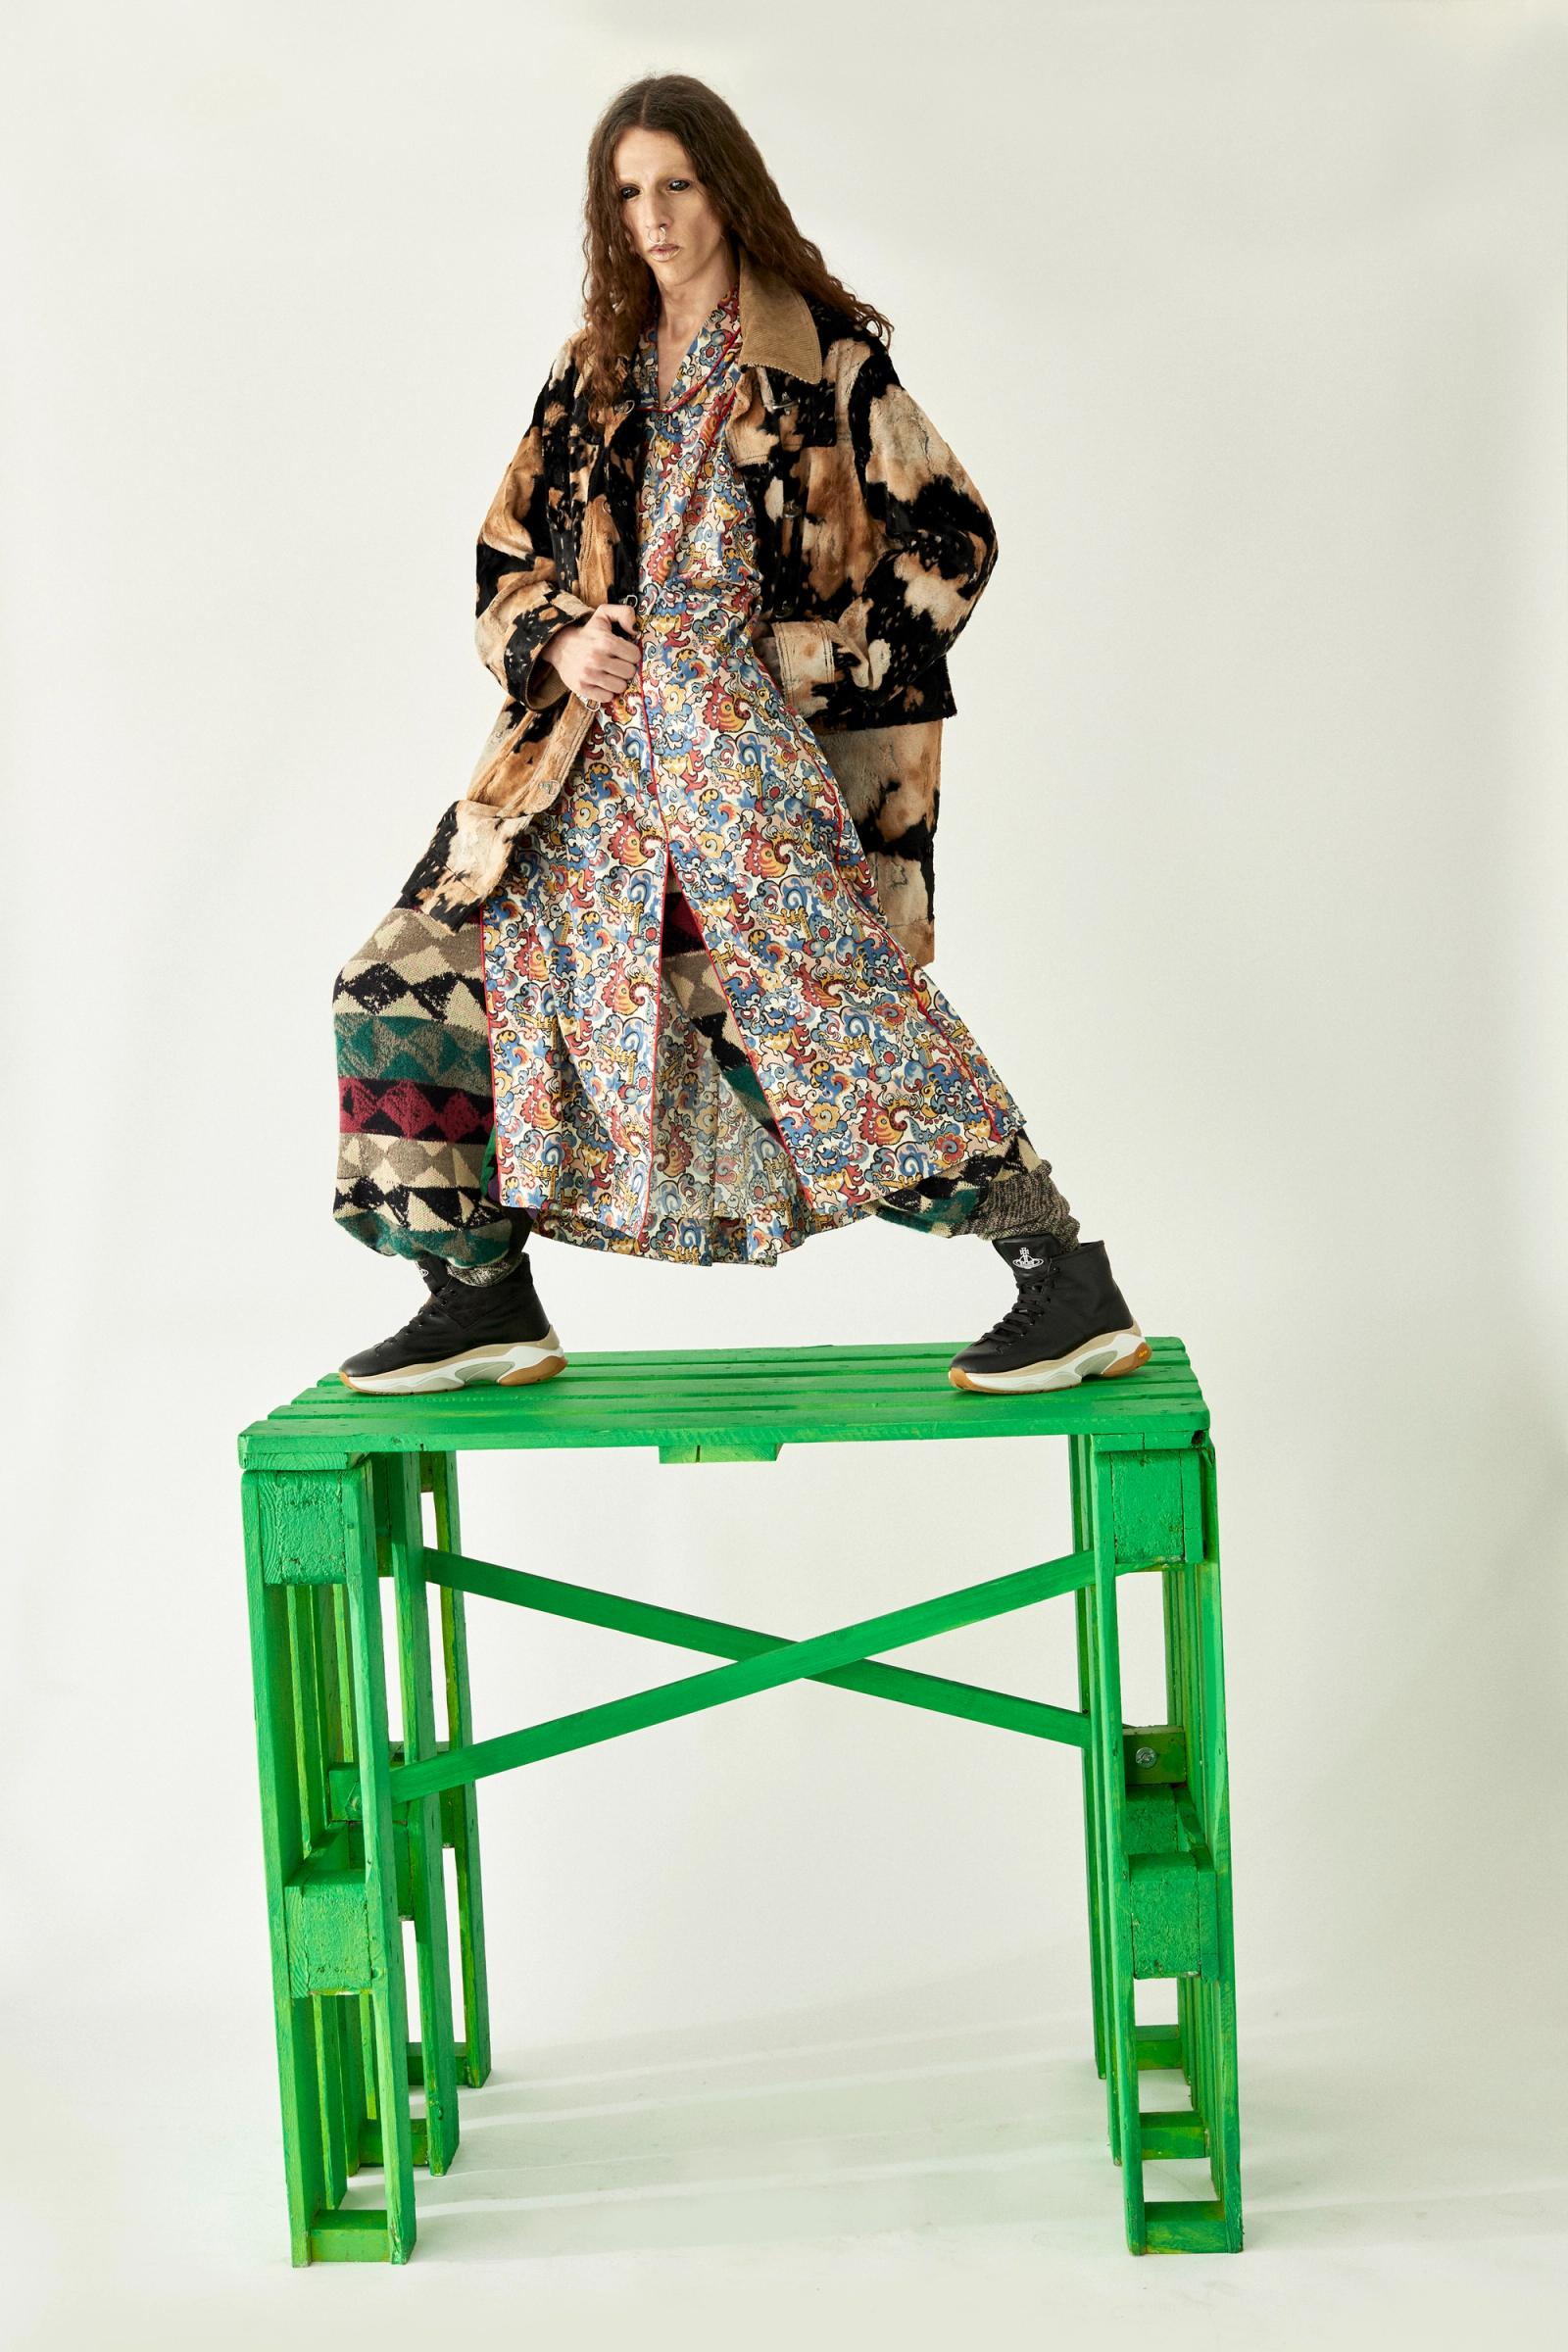 Andeas Kronthaler - for Vivienne Westwood F/W21 styled by Sabina Schreder